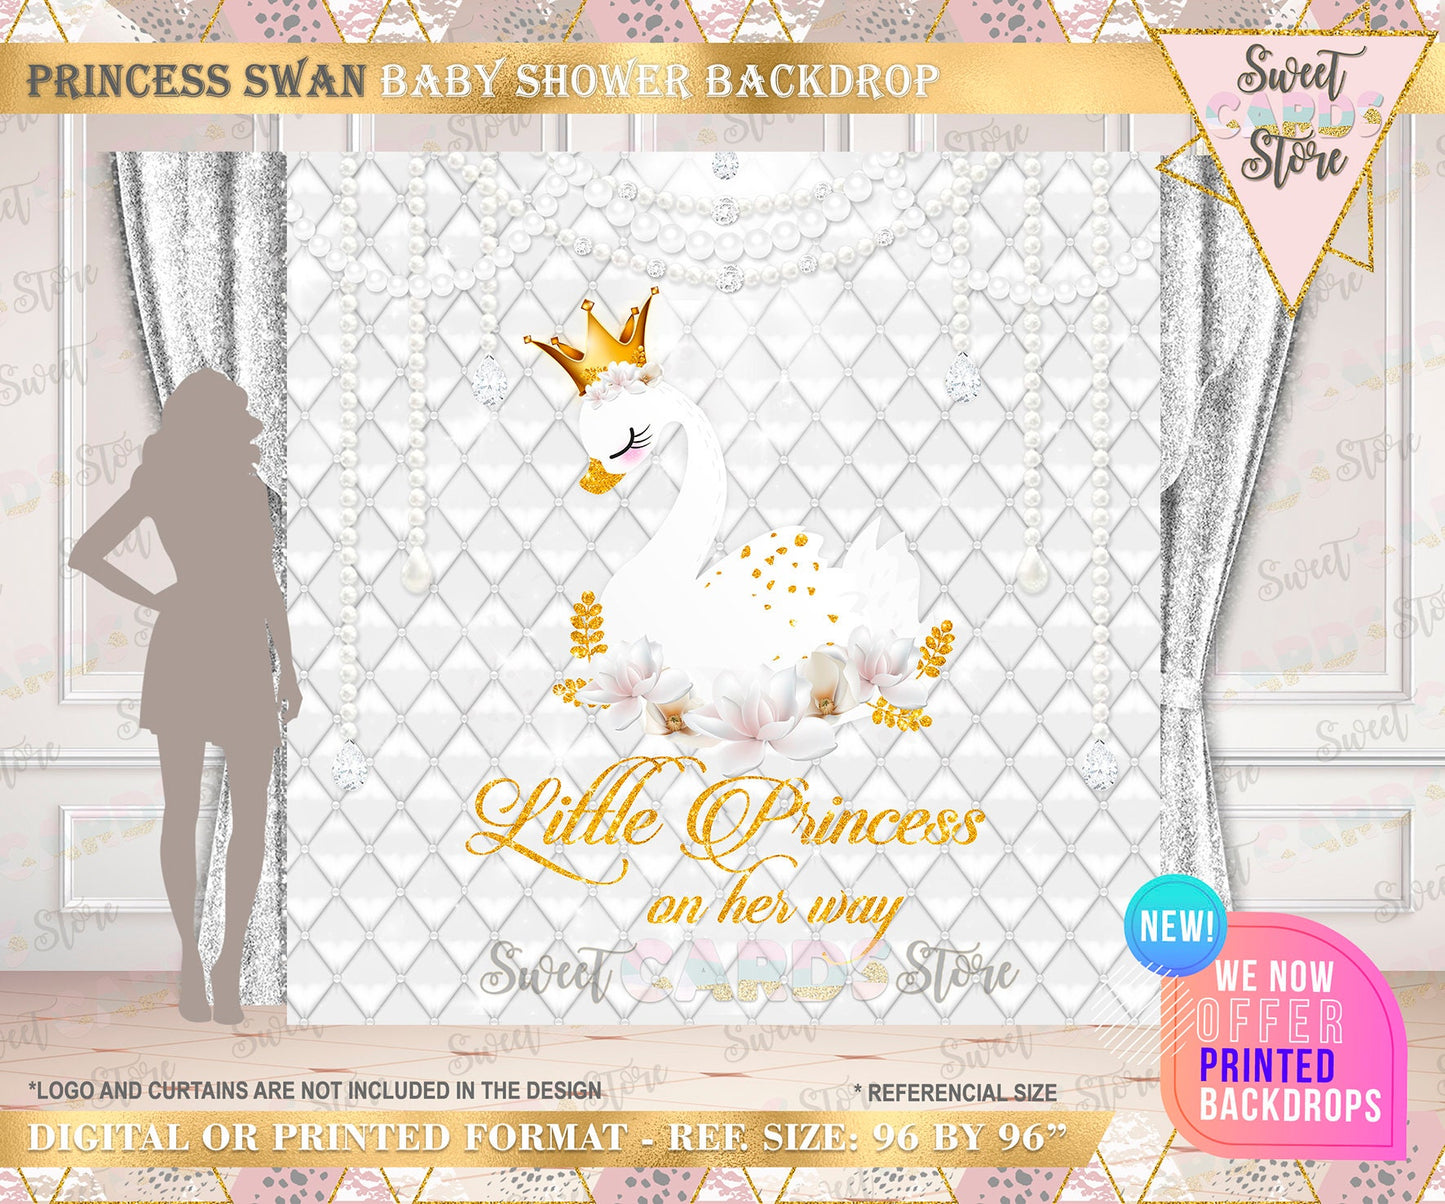 Princess Swan Backdrop, Princess swan banner, Swan pearls backdrop, Swan flowers pearls backdrop. Princess swan baby shower backdrop, swan